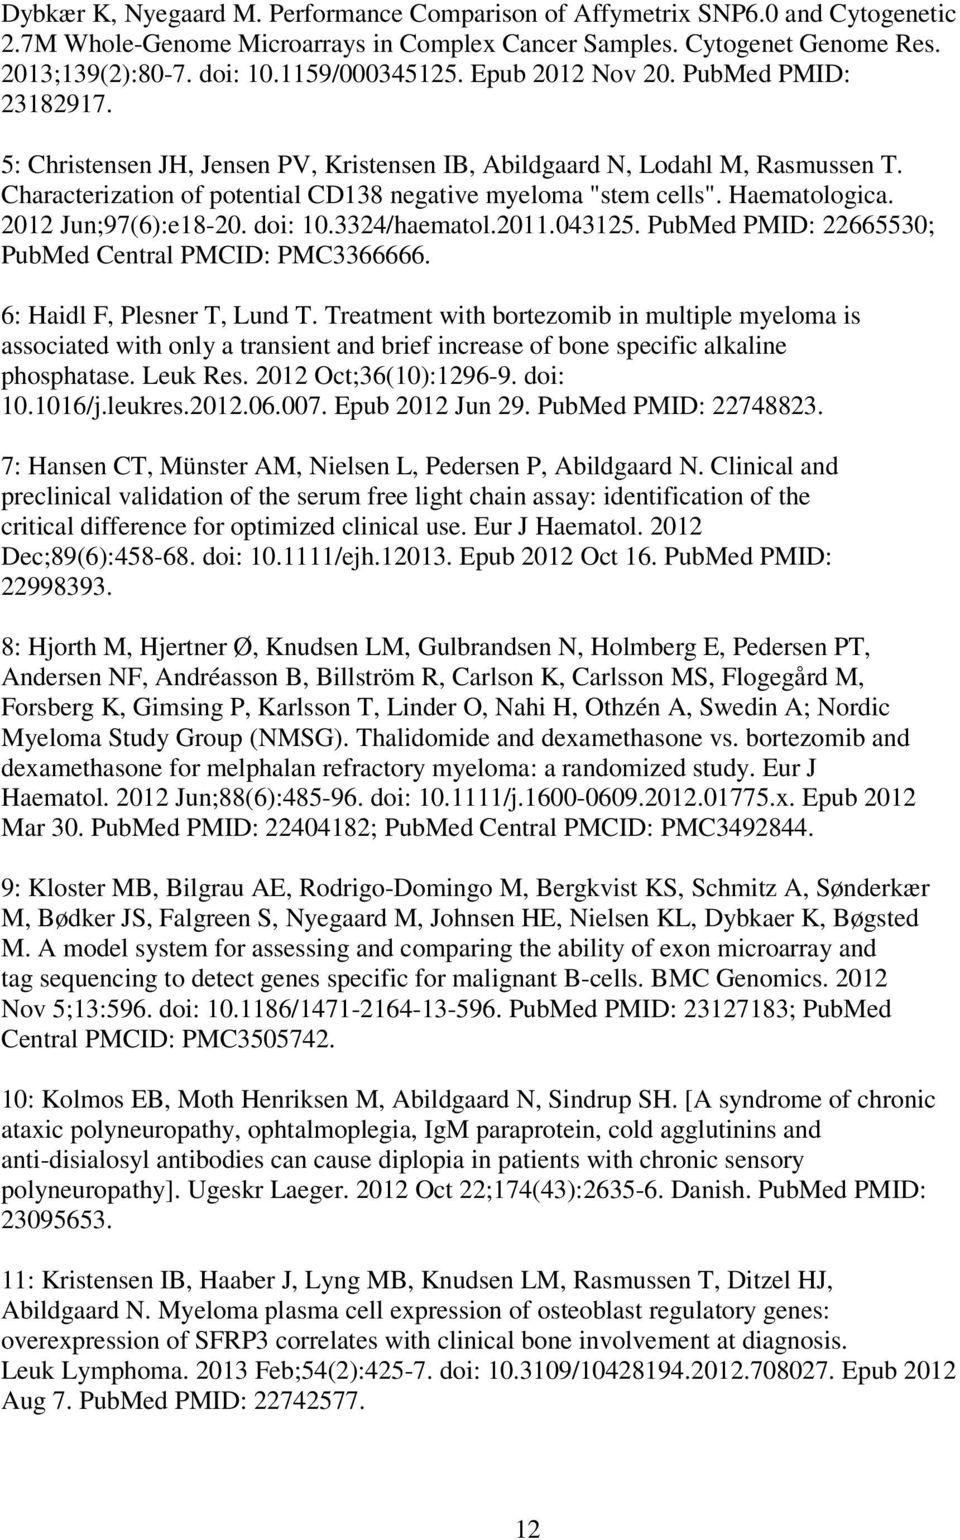 Characterization of potential CD138 negative myeloma "stem cells". Haematologica. 2012 Jun;97(6):e18-20. doi: 10.3324/haematol.2011.043125. PubMed PMID: 22665530; PubMed Central PMCID: PMC3366666.